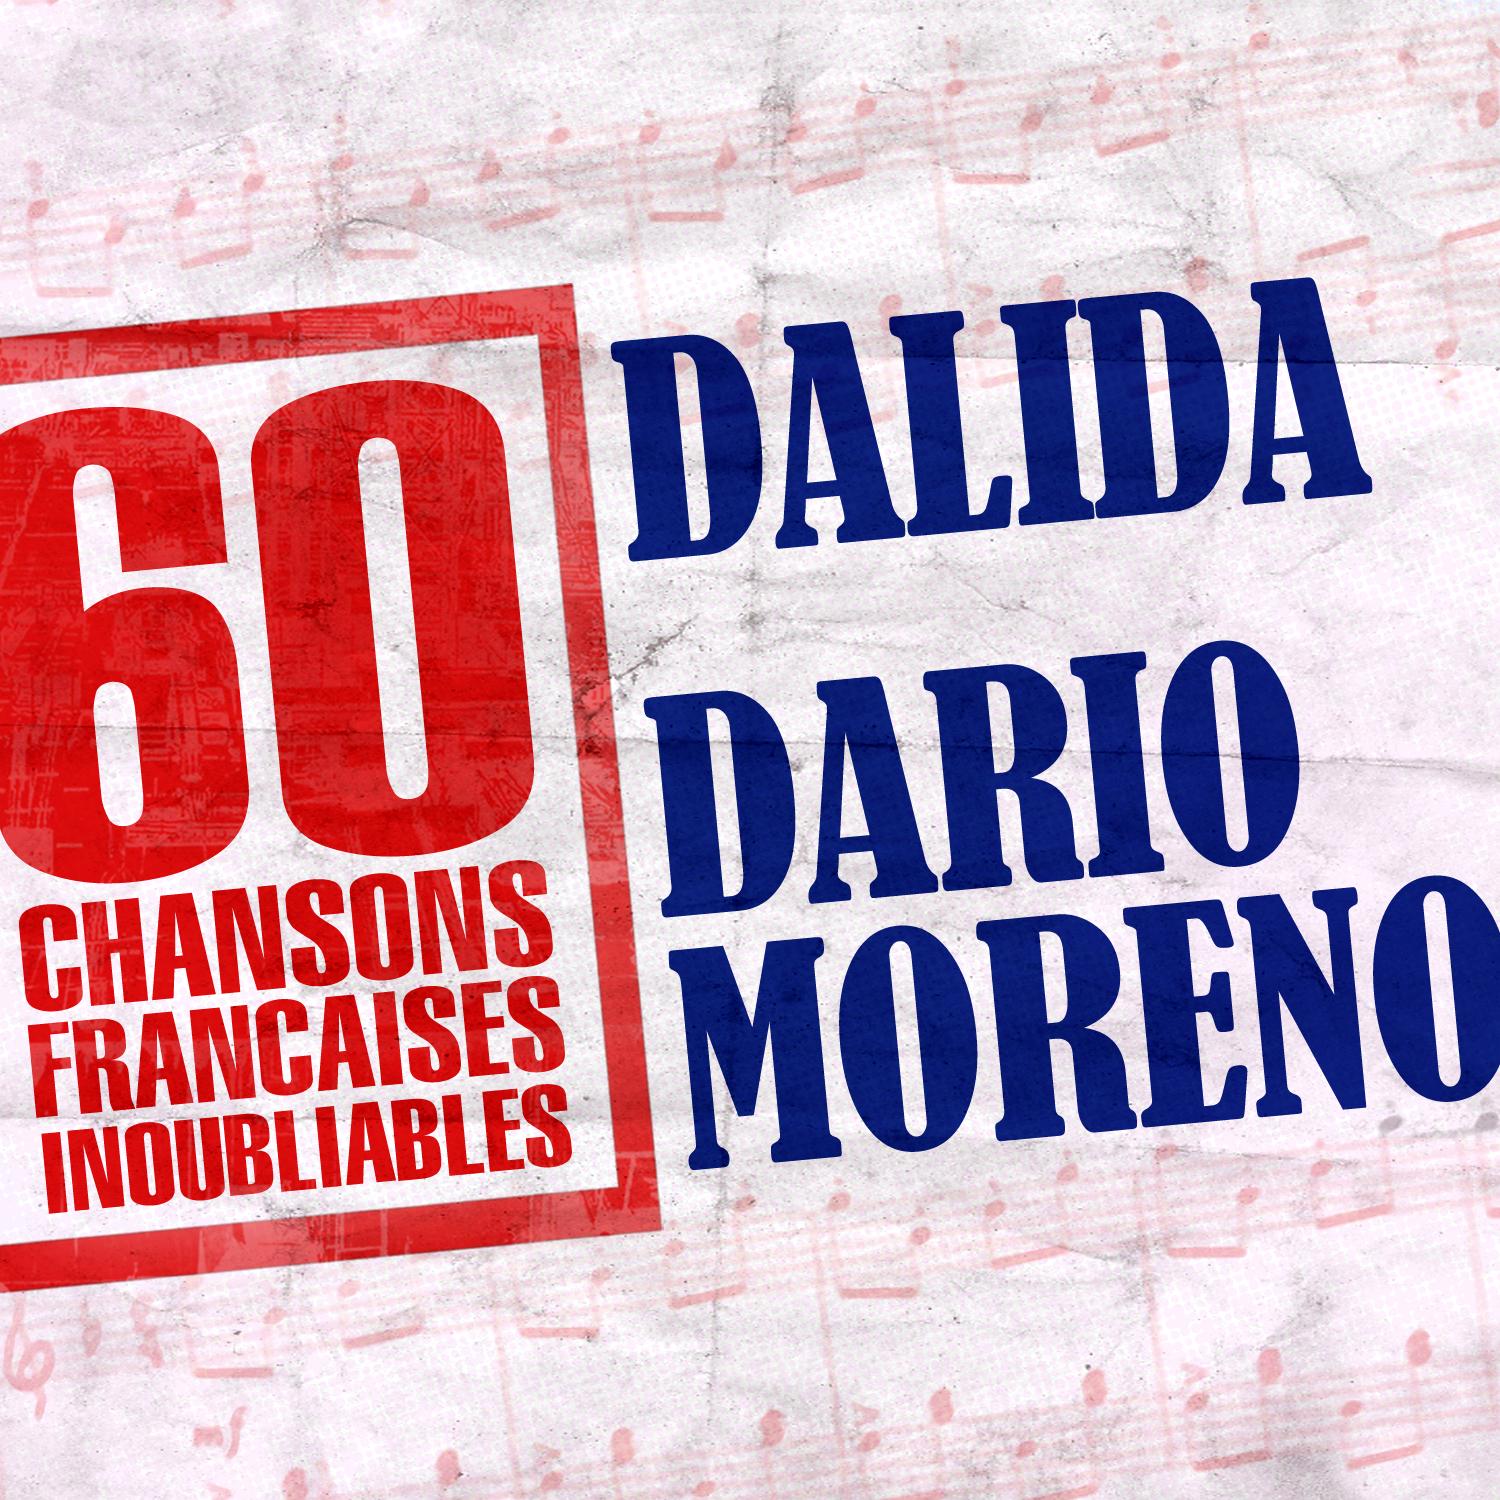 60 Chansons Fran aises Inoubliables De Dalida Et Dario Moreno